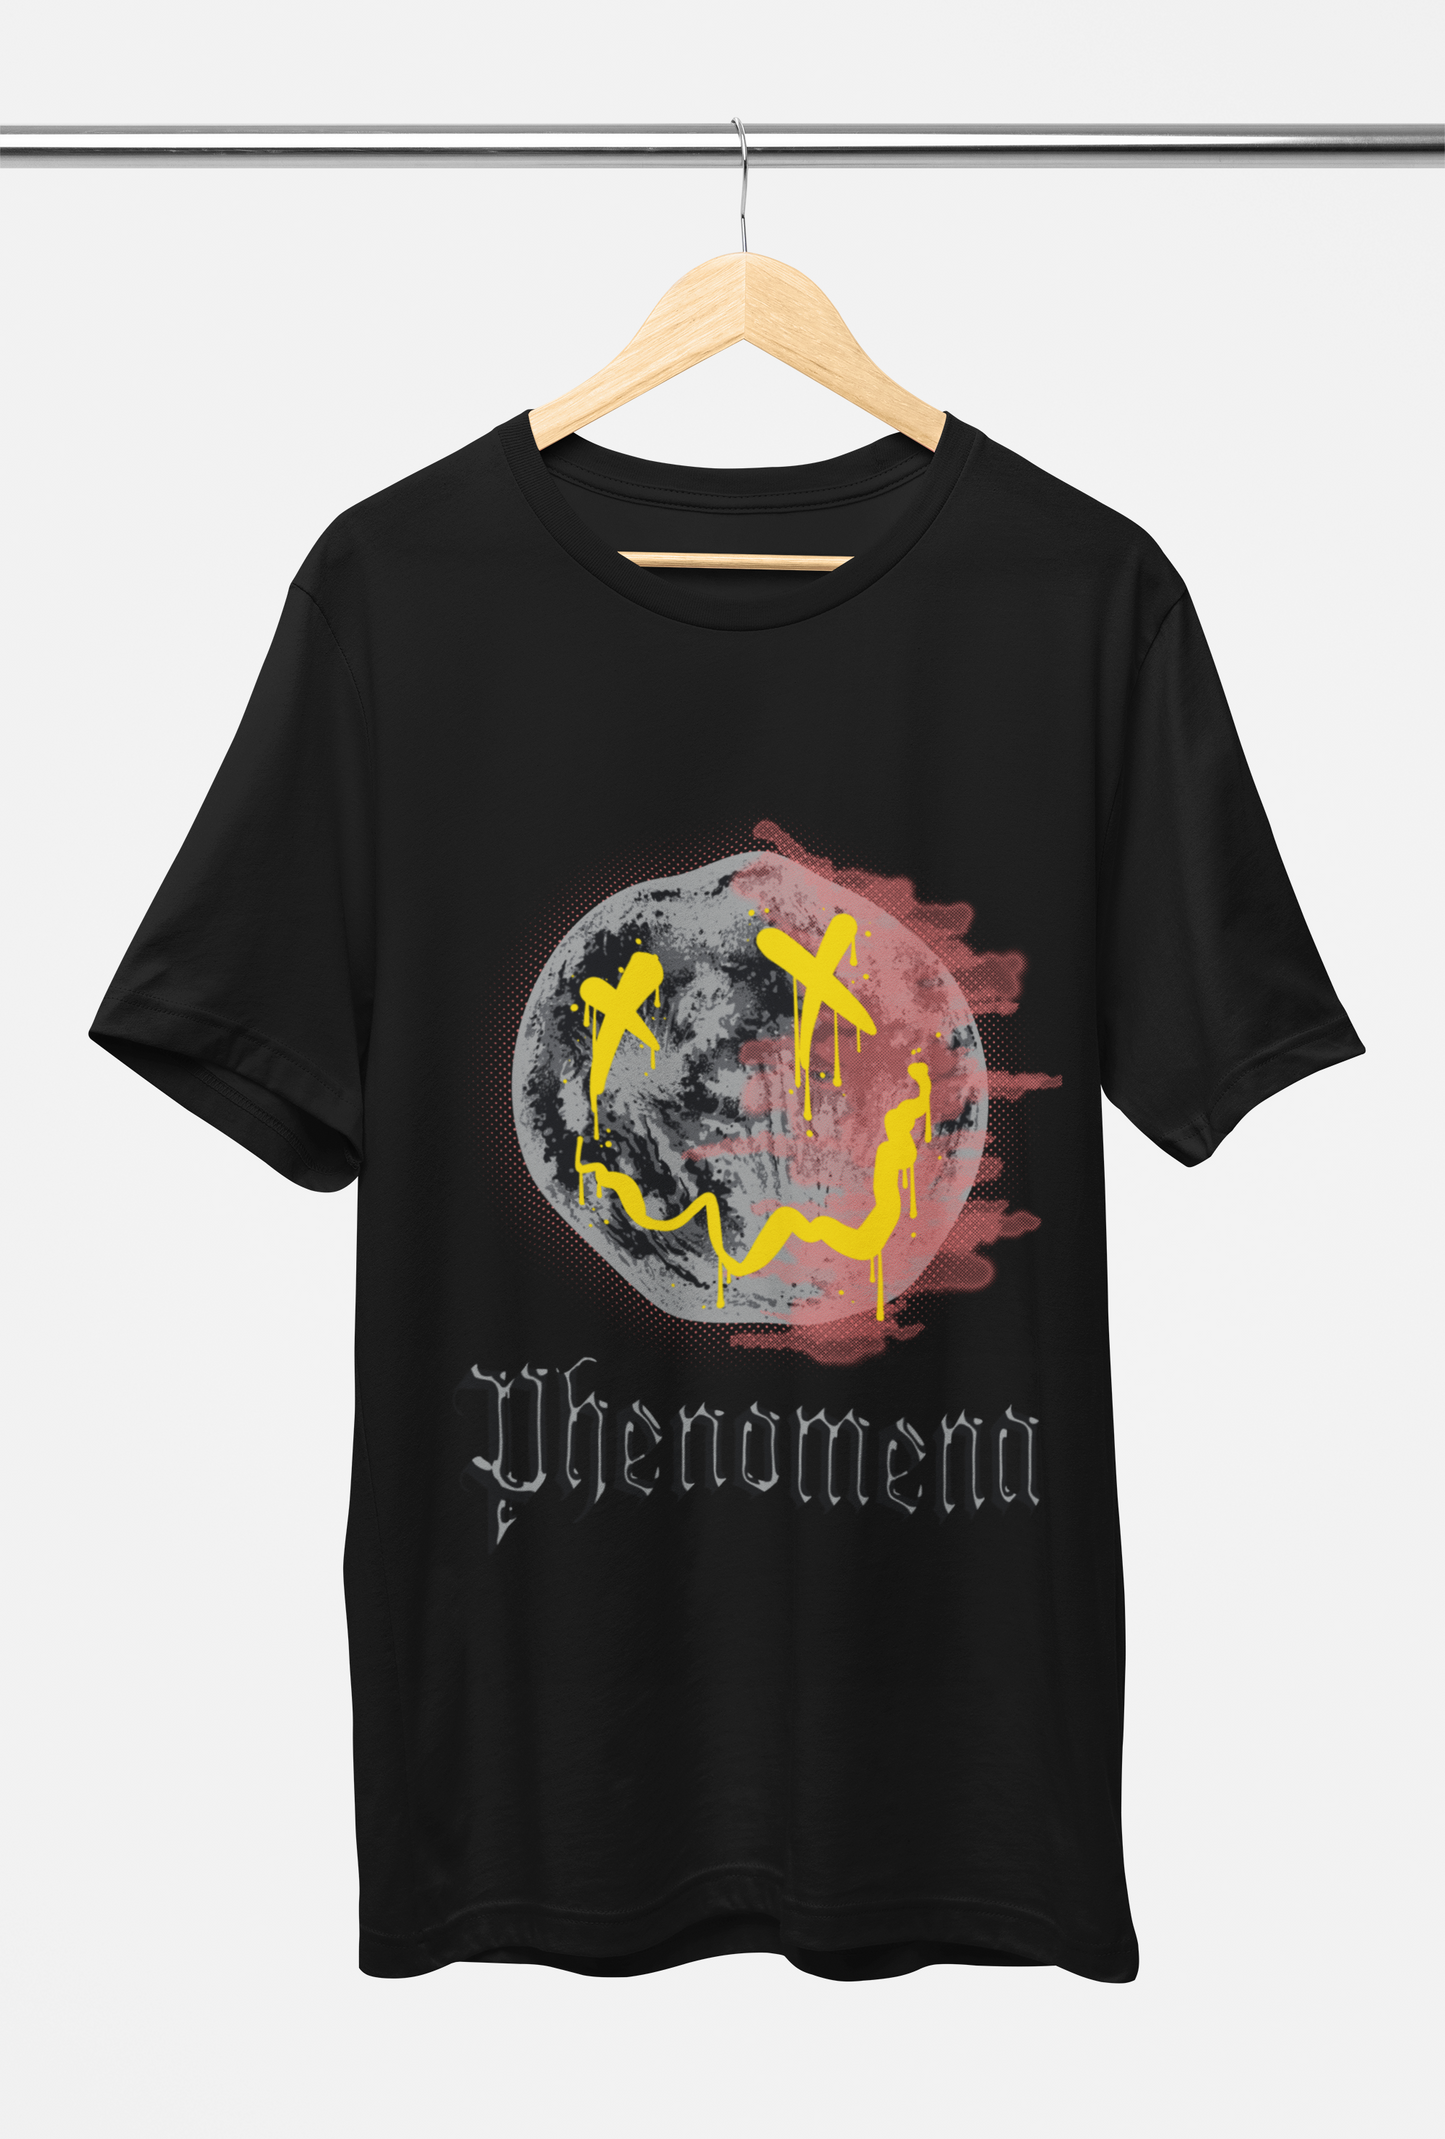 Phenomena Unisex Black Oversized Tshirt | DJ Paroma Collection | ATOM